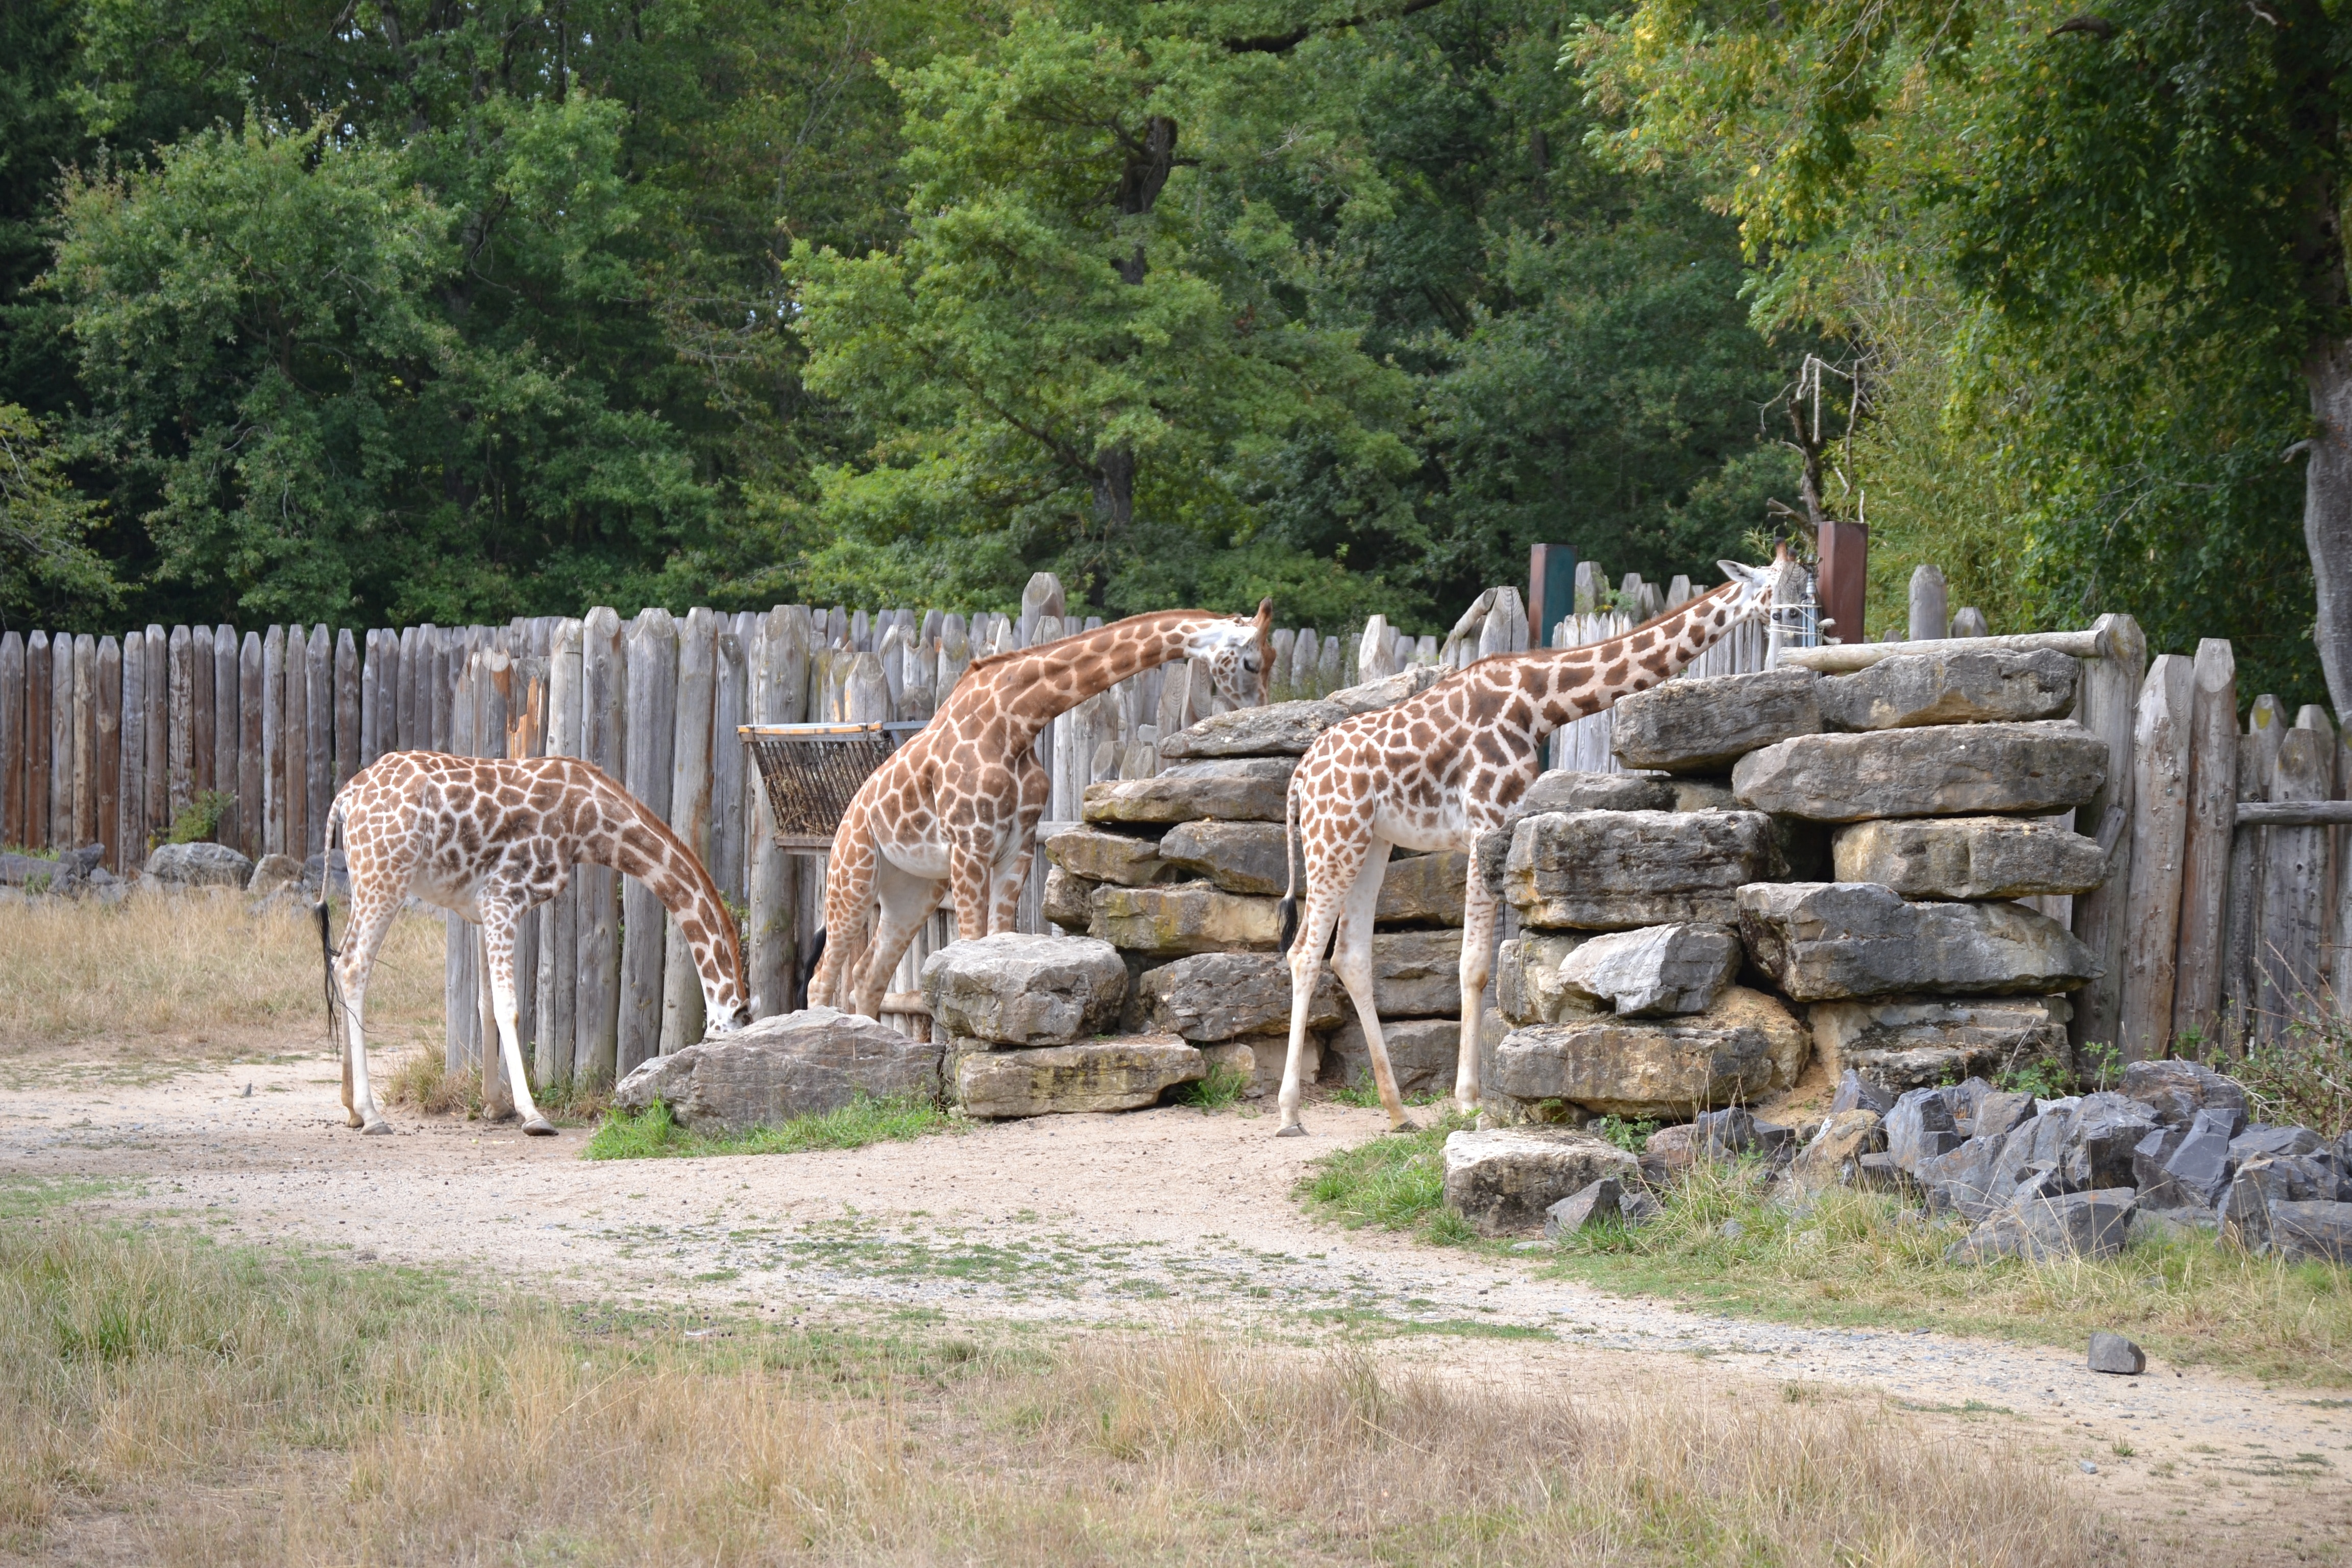 Group of Giraffe beside gray stone formation